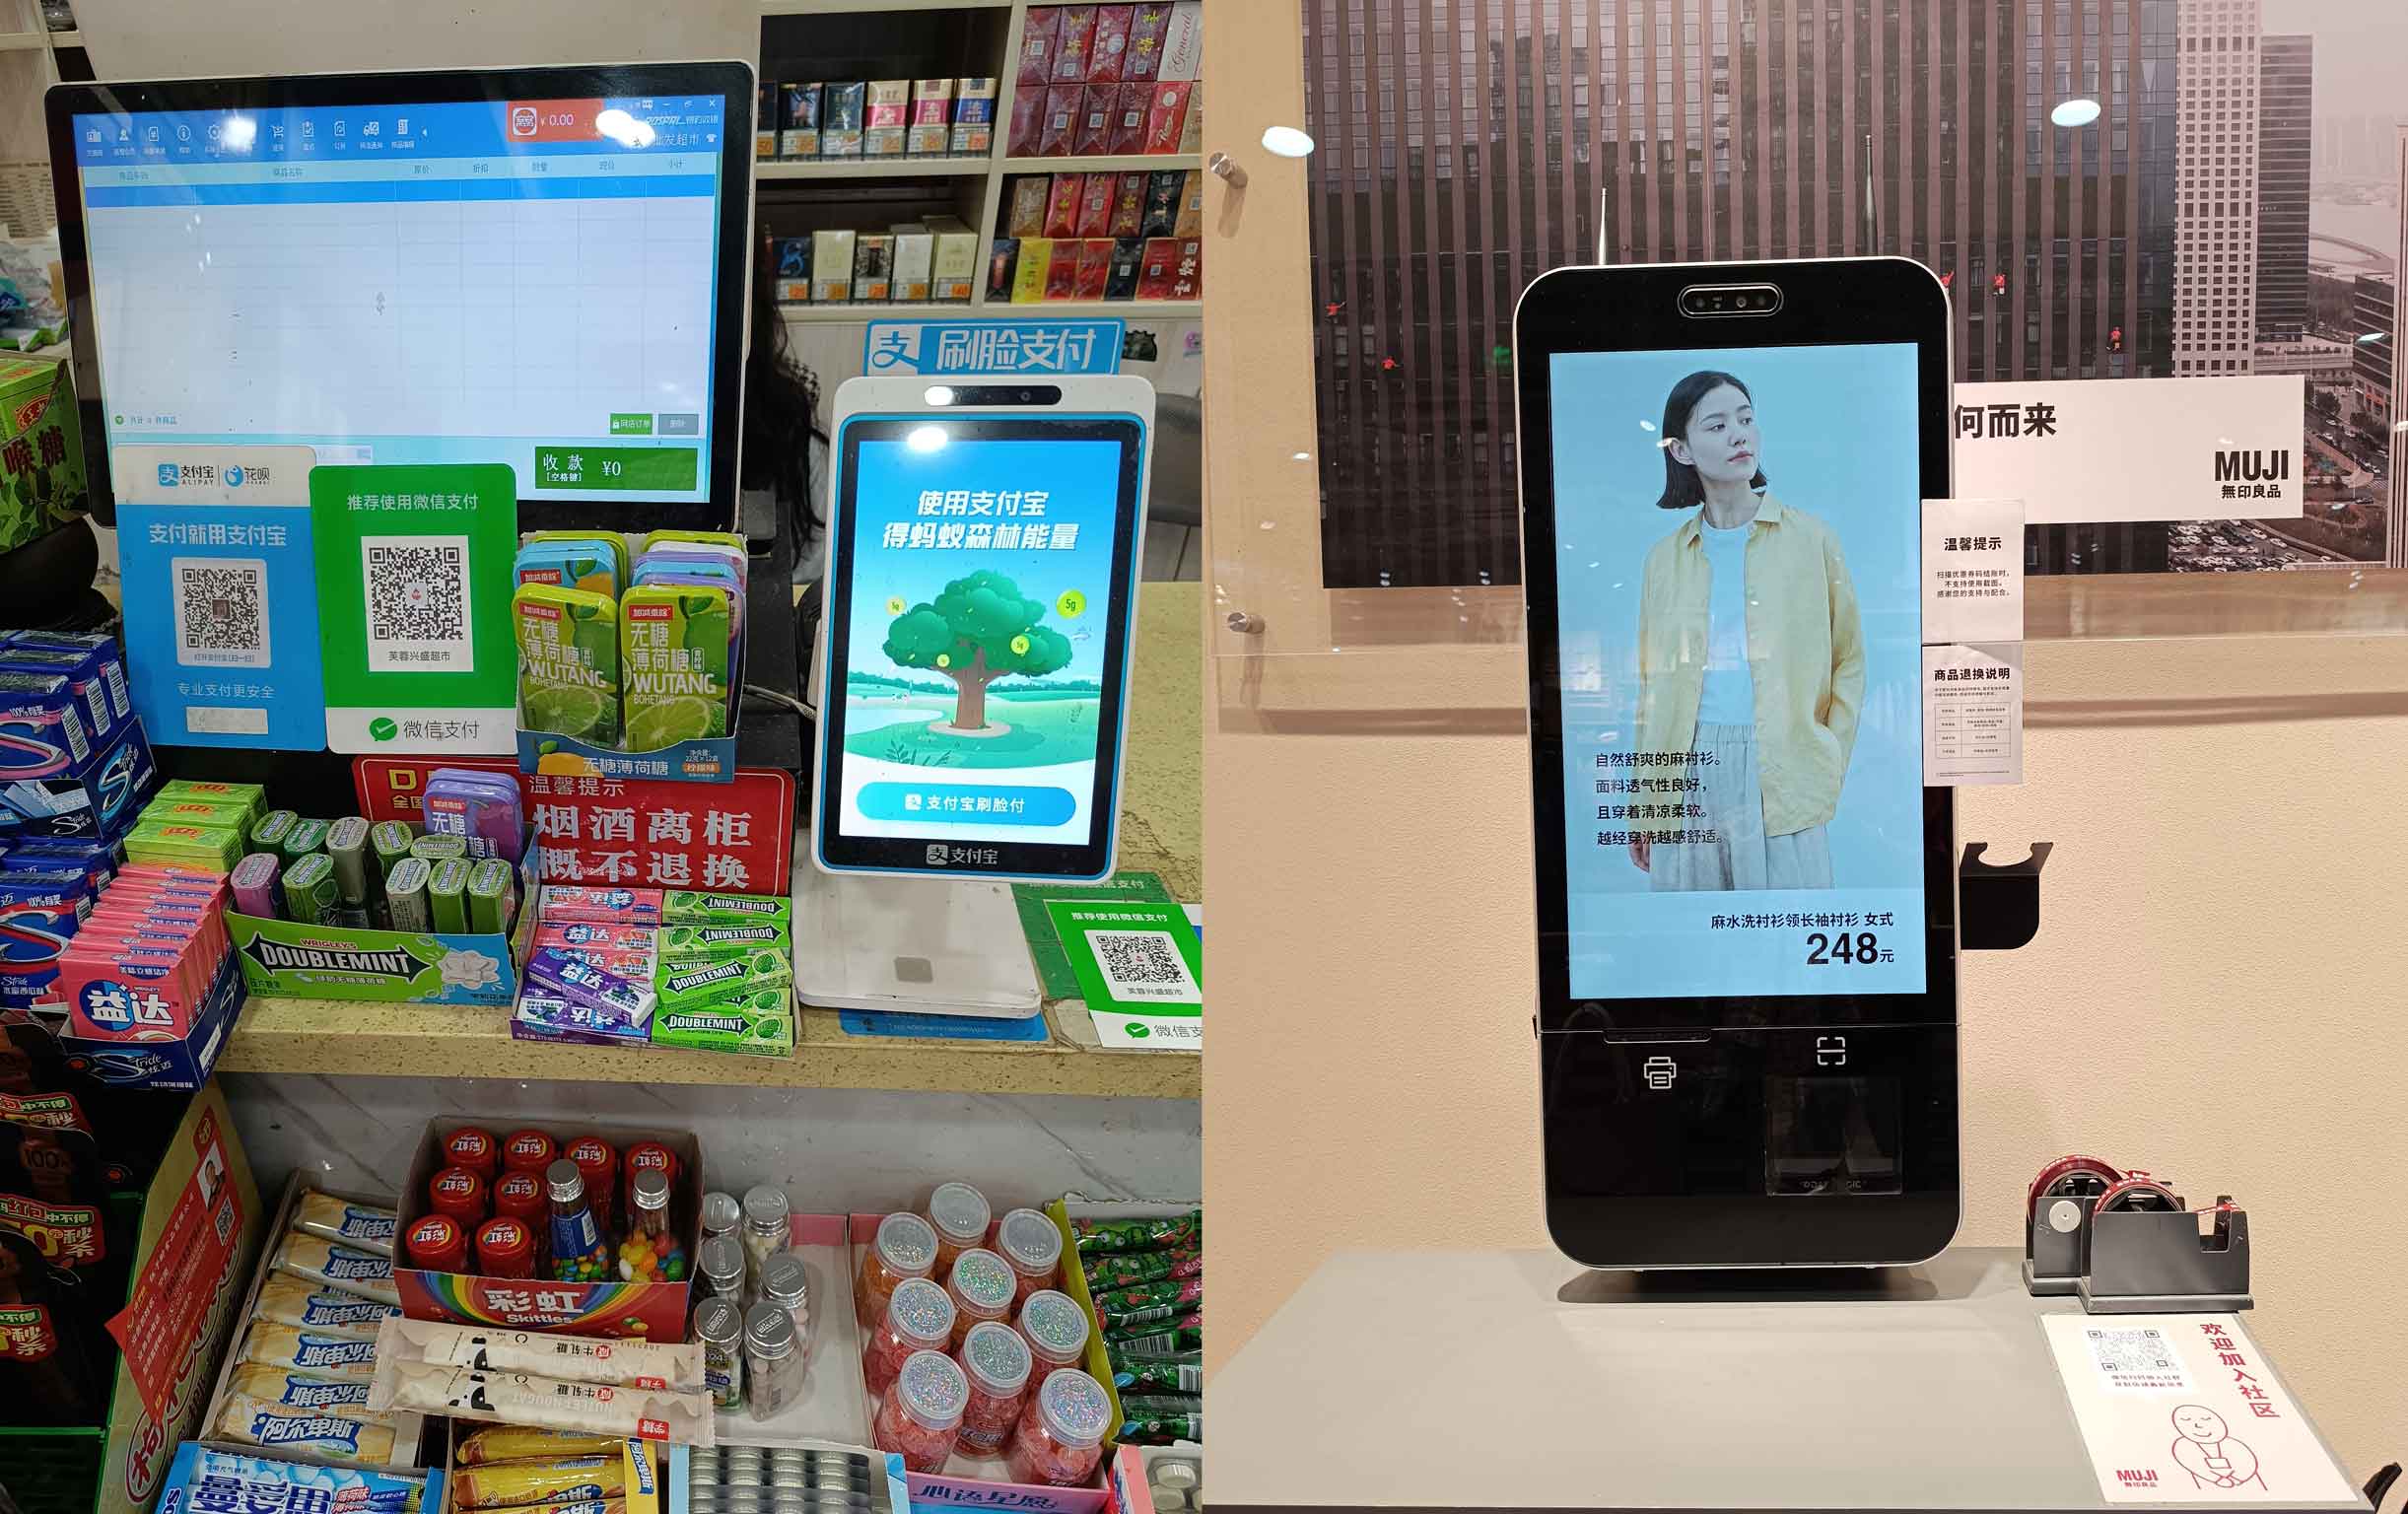 Inside store- Retail tech displays